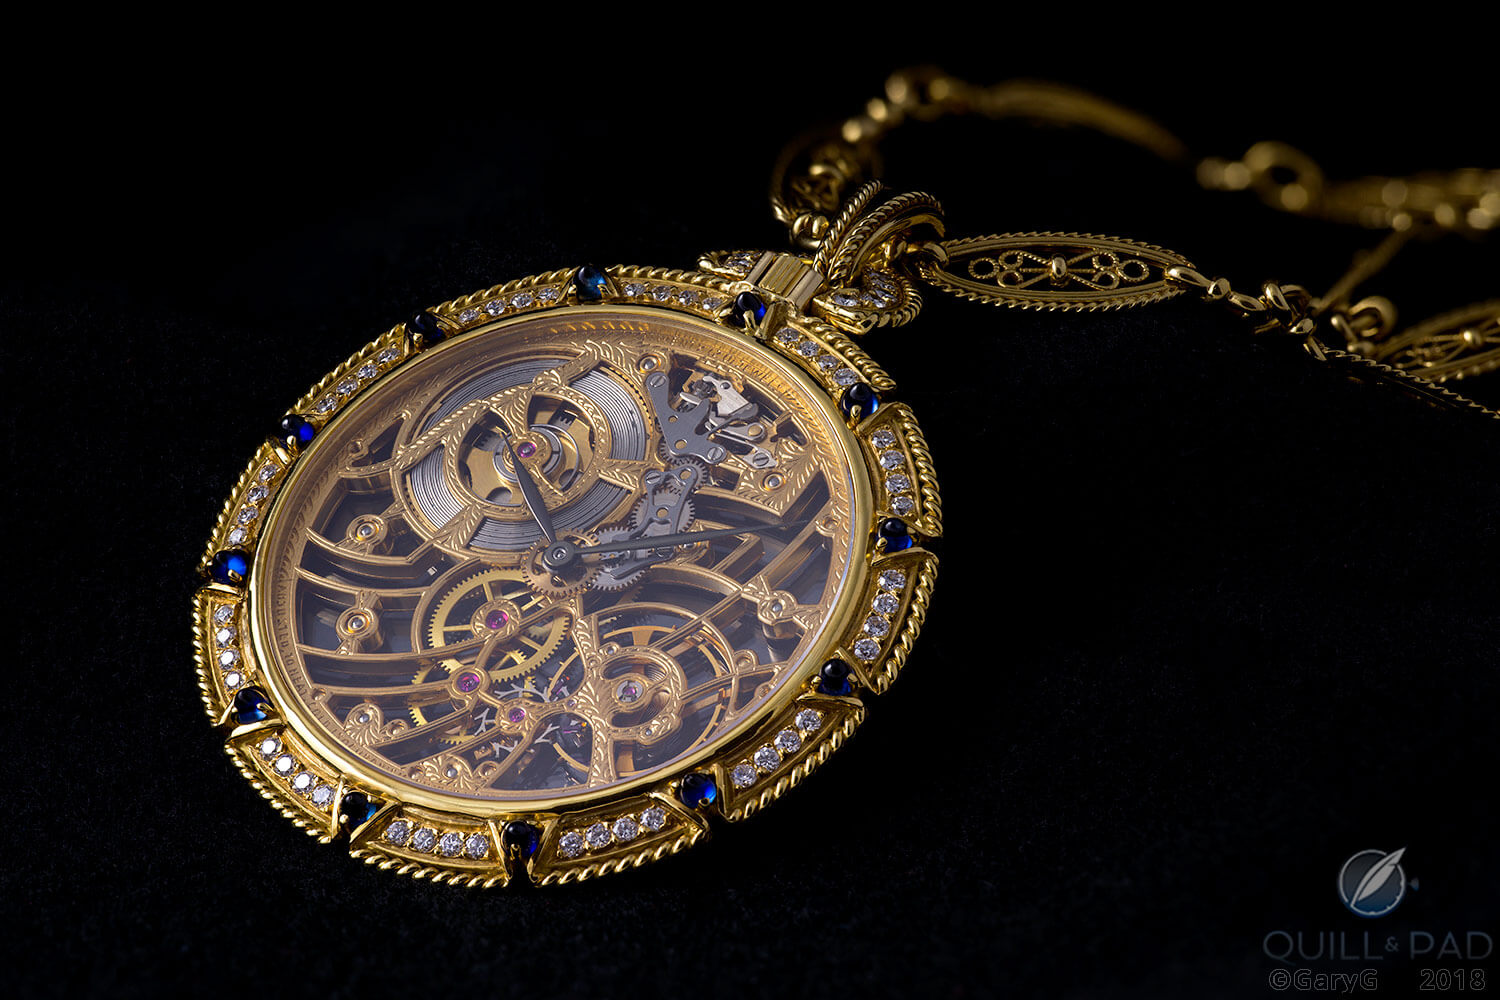 Jeweled ultra-thin skeletonized pocket watch by Audemars Piguet